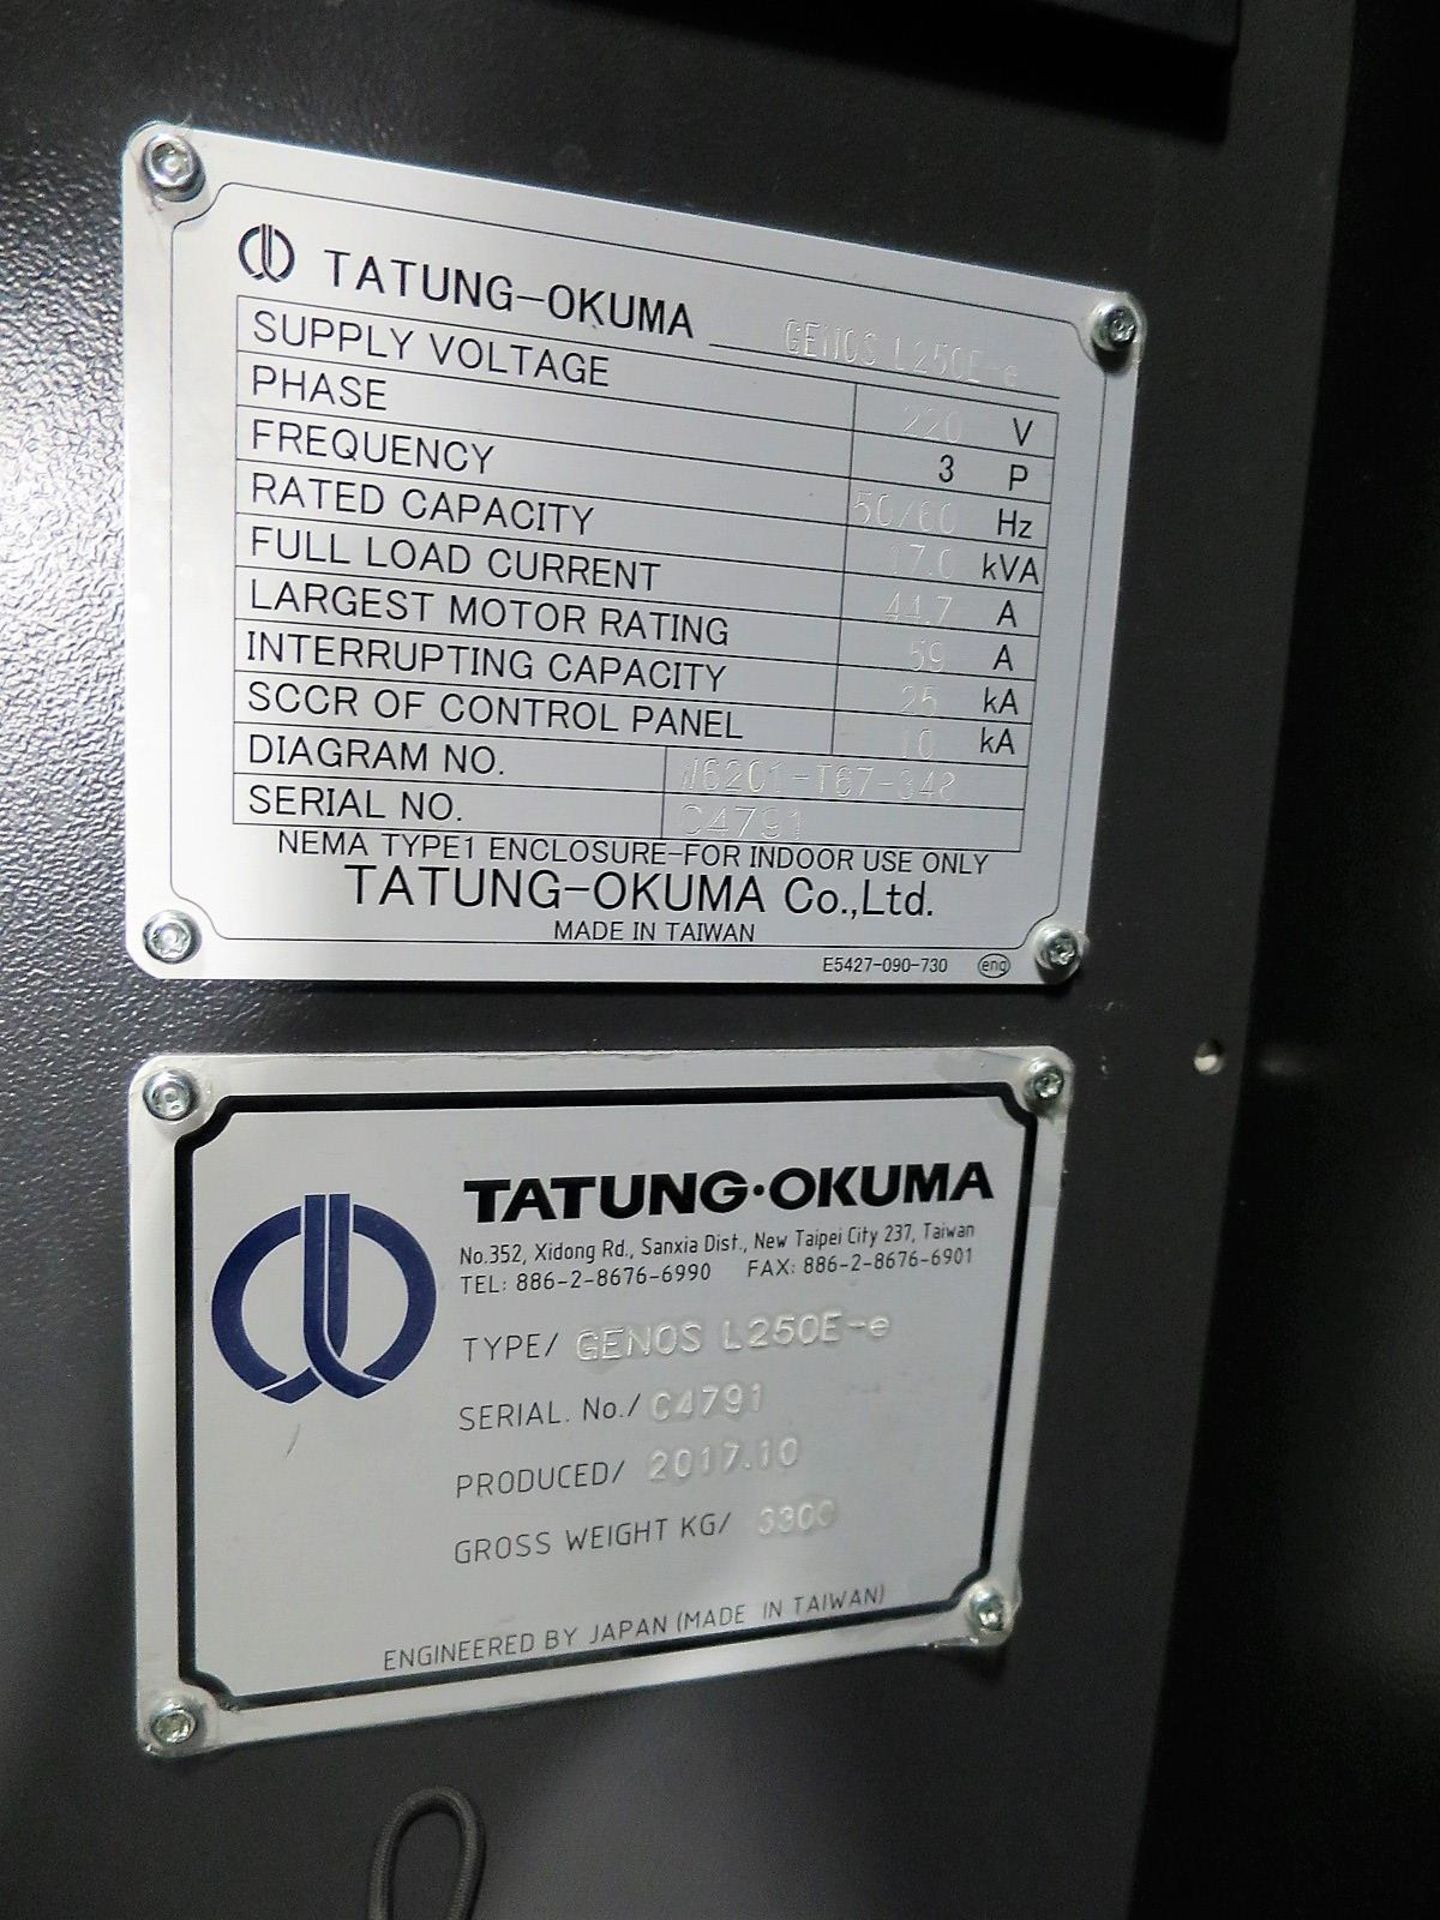 Okuma Genos L250E 2-Axis CNC Turning Center Lathe, S/N C4791, New 2017 - Image 10 of 10